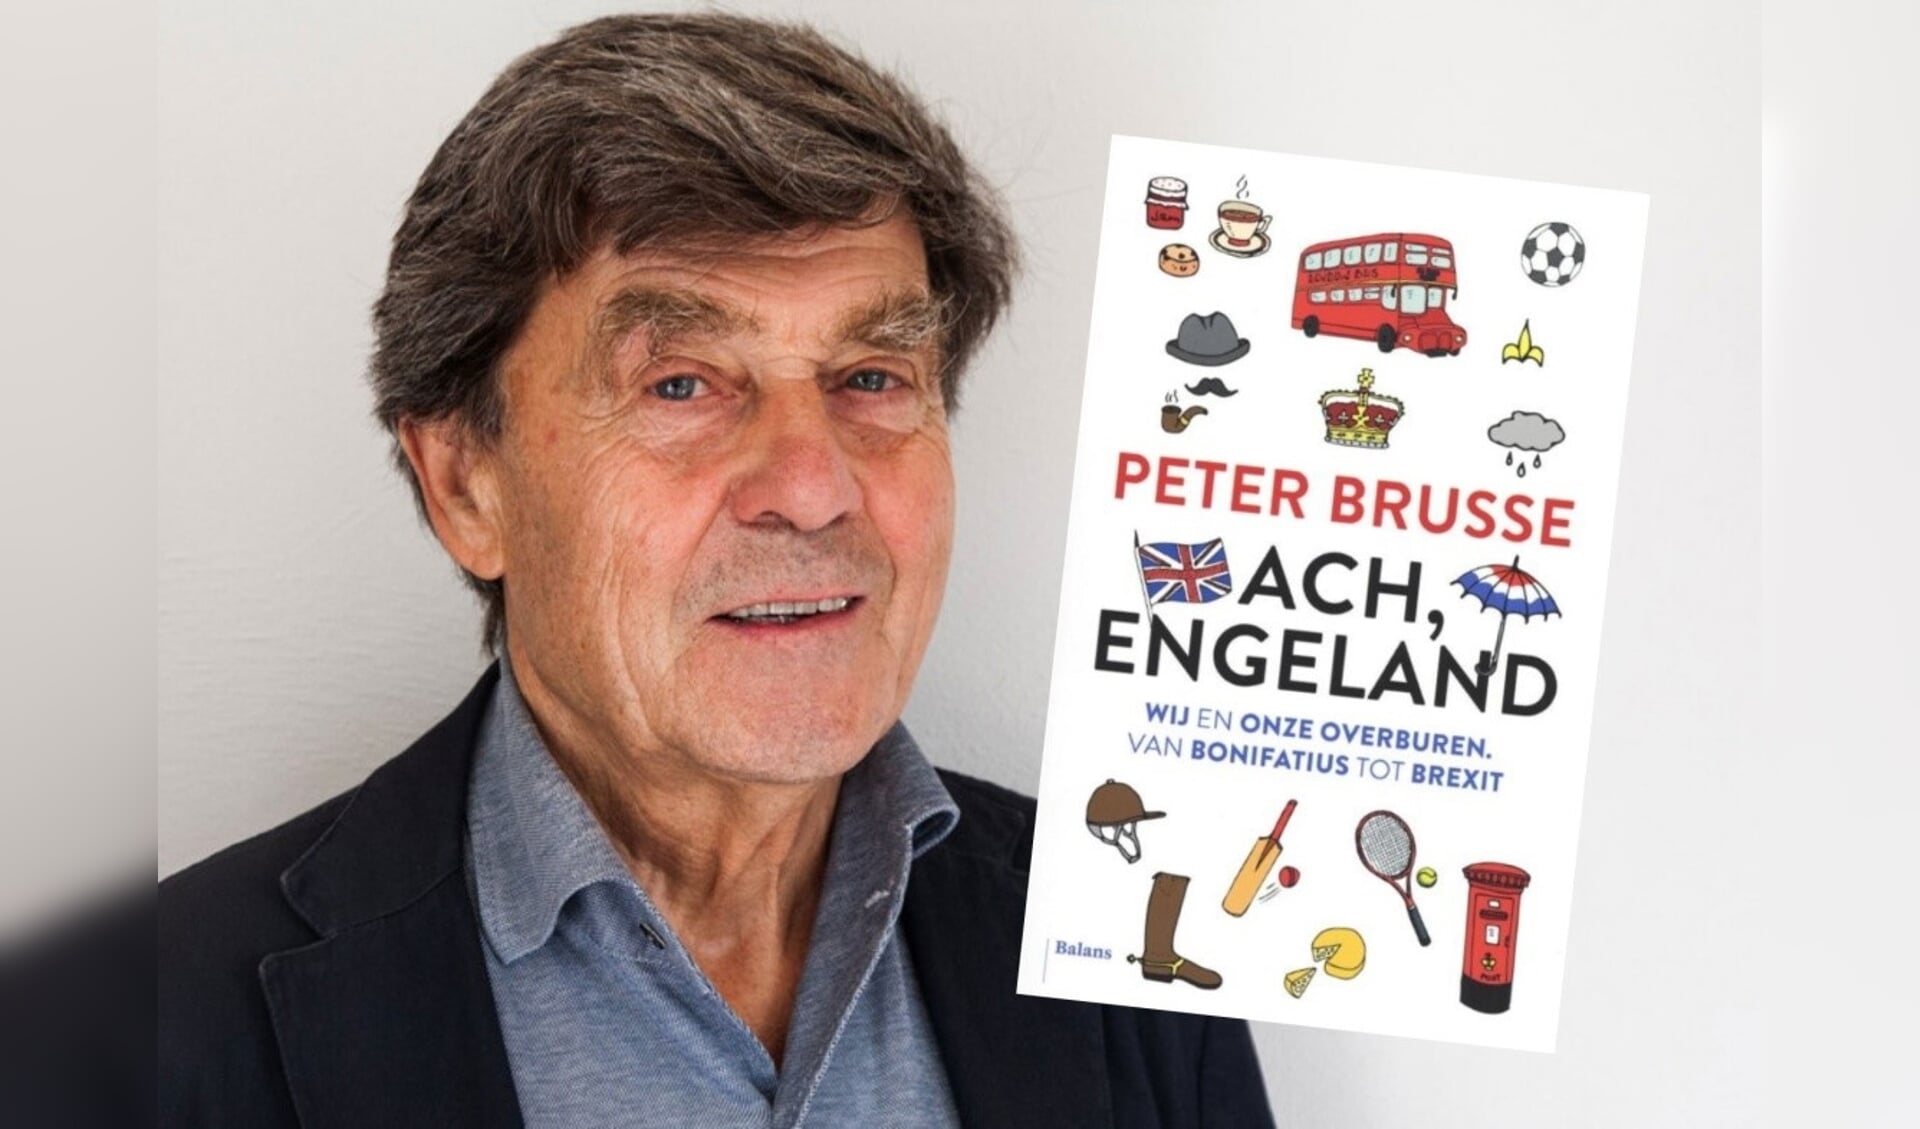 Peter Brusse houdt lezing over boek 'Ach, Engeland'